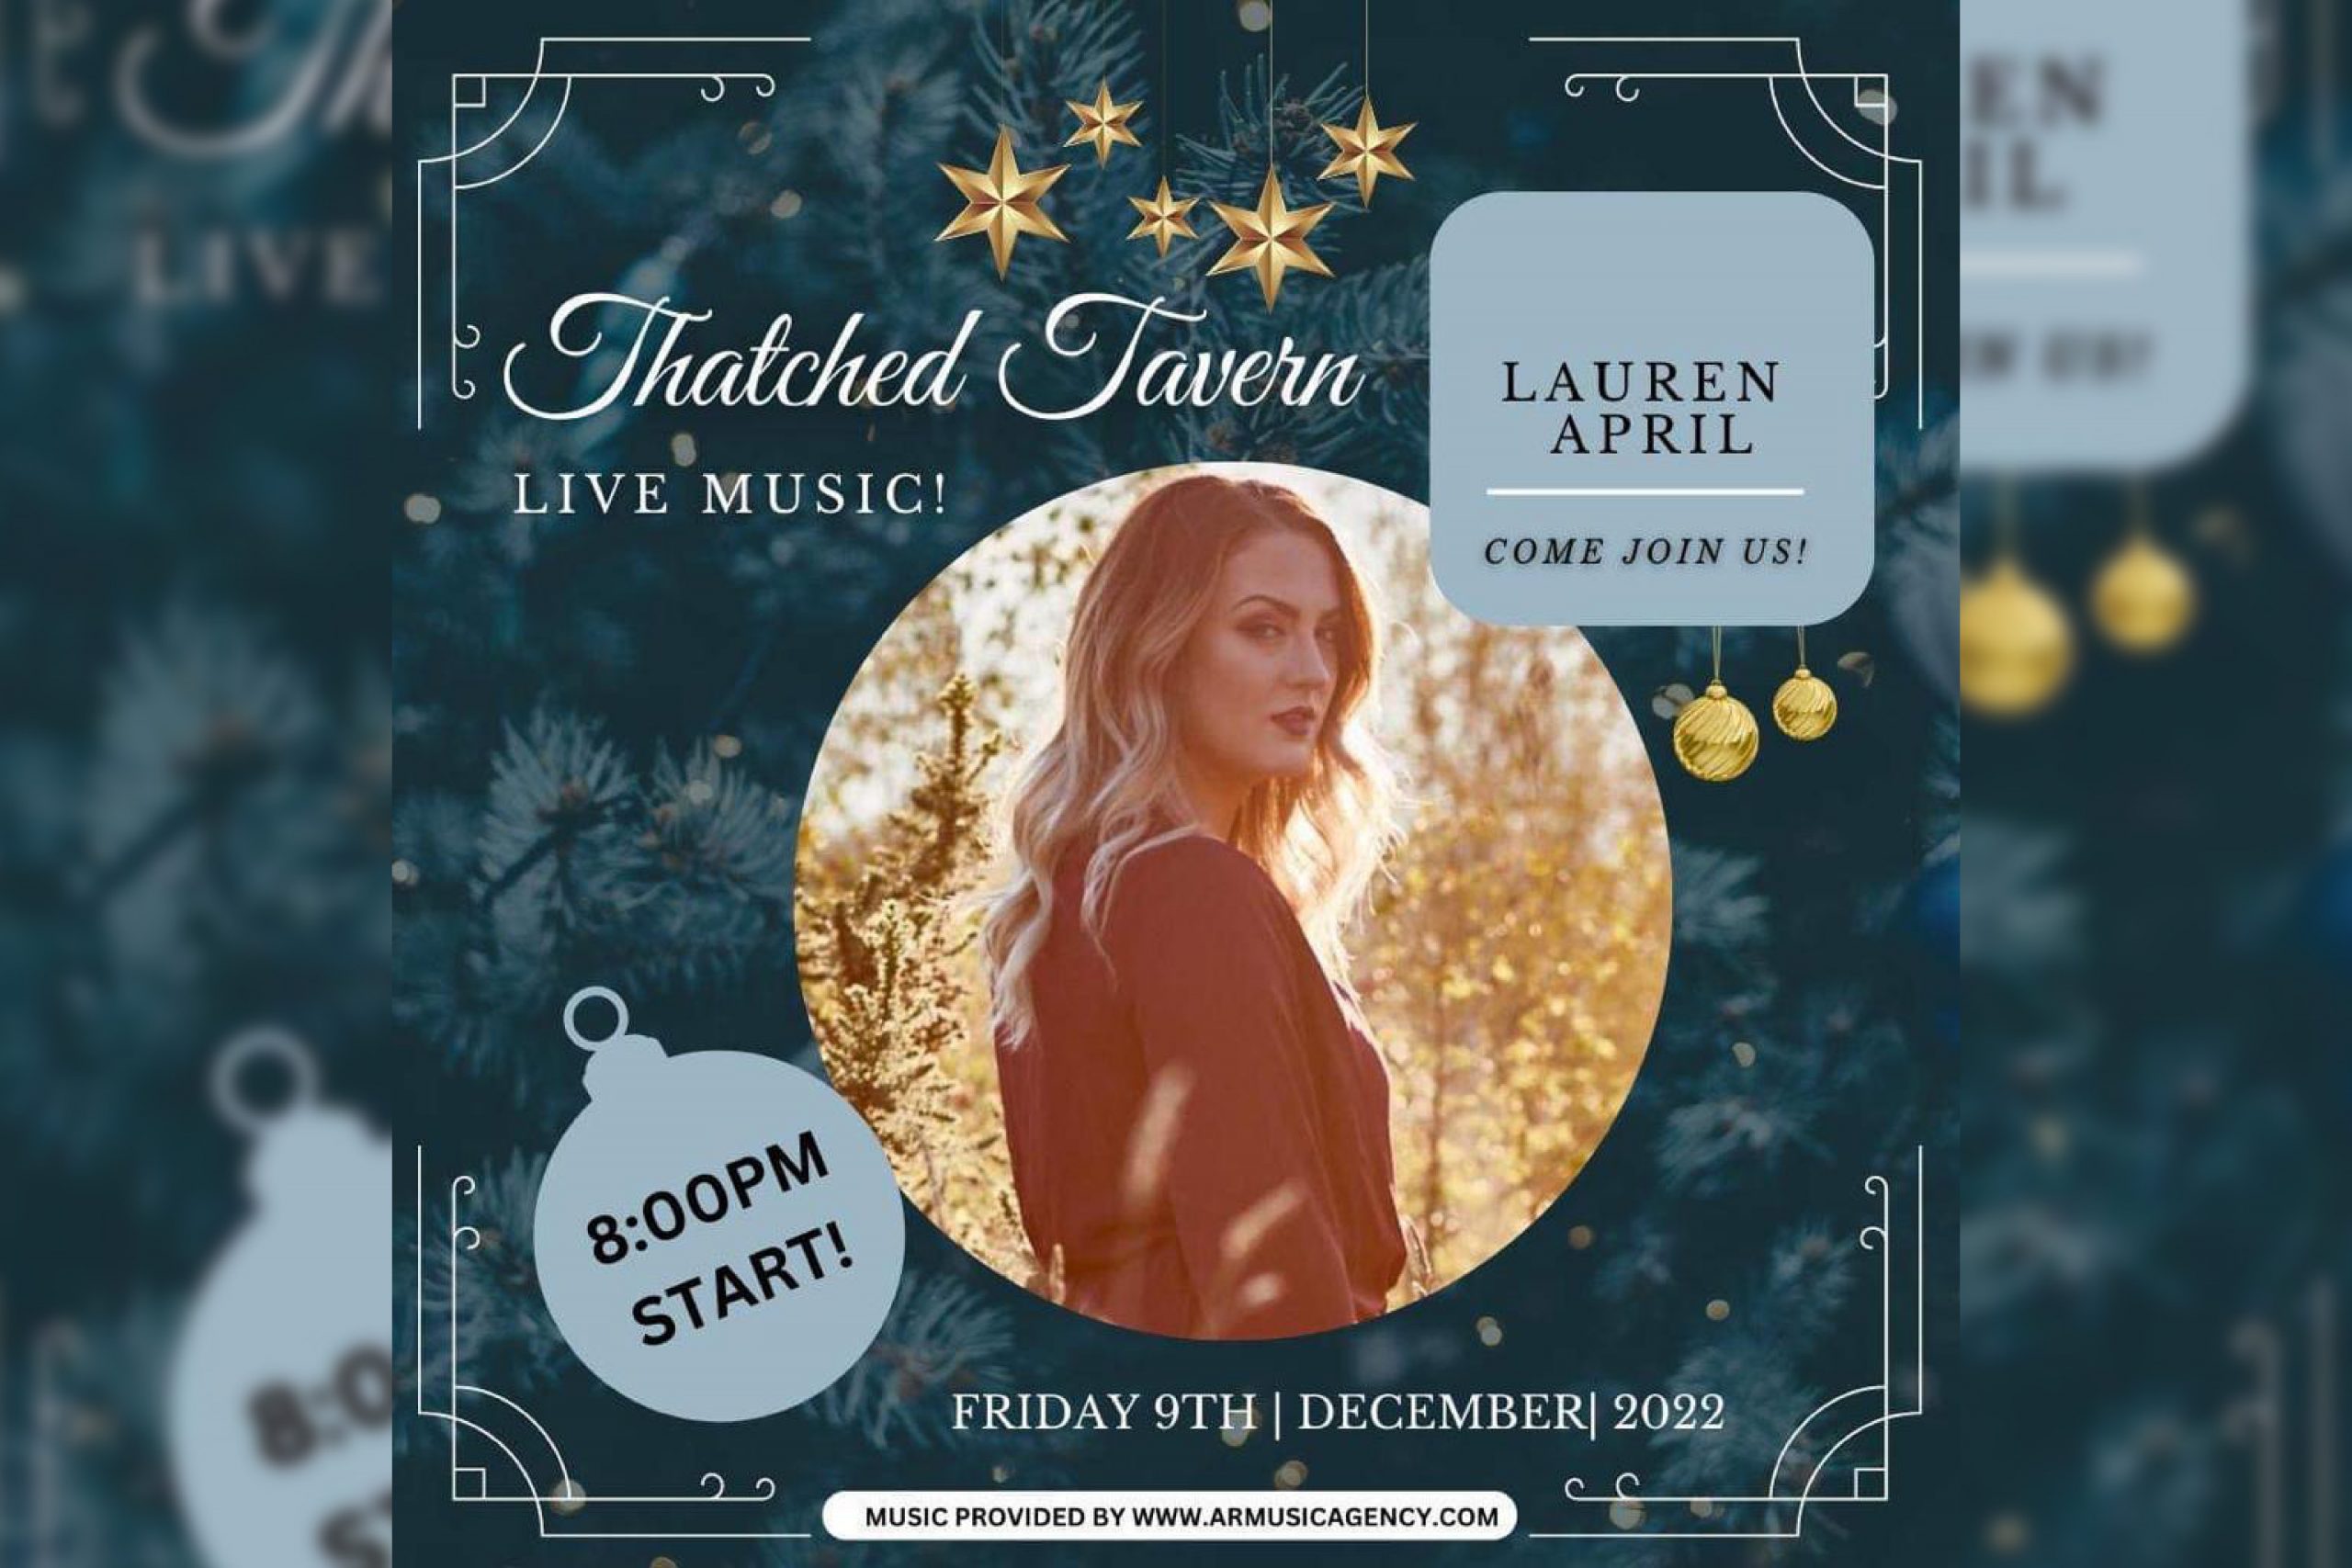 Live Music Lauren April Friday 9th December 2022 at 8pm